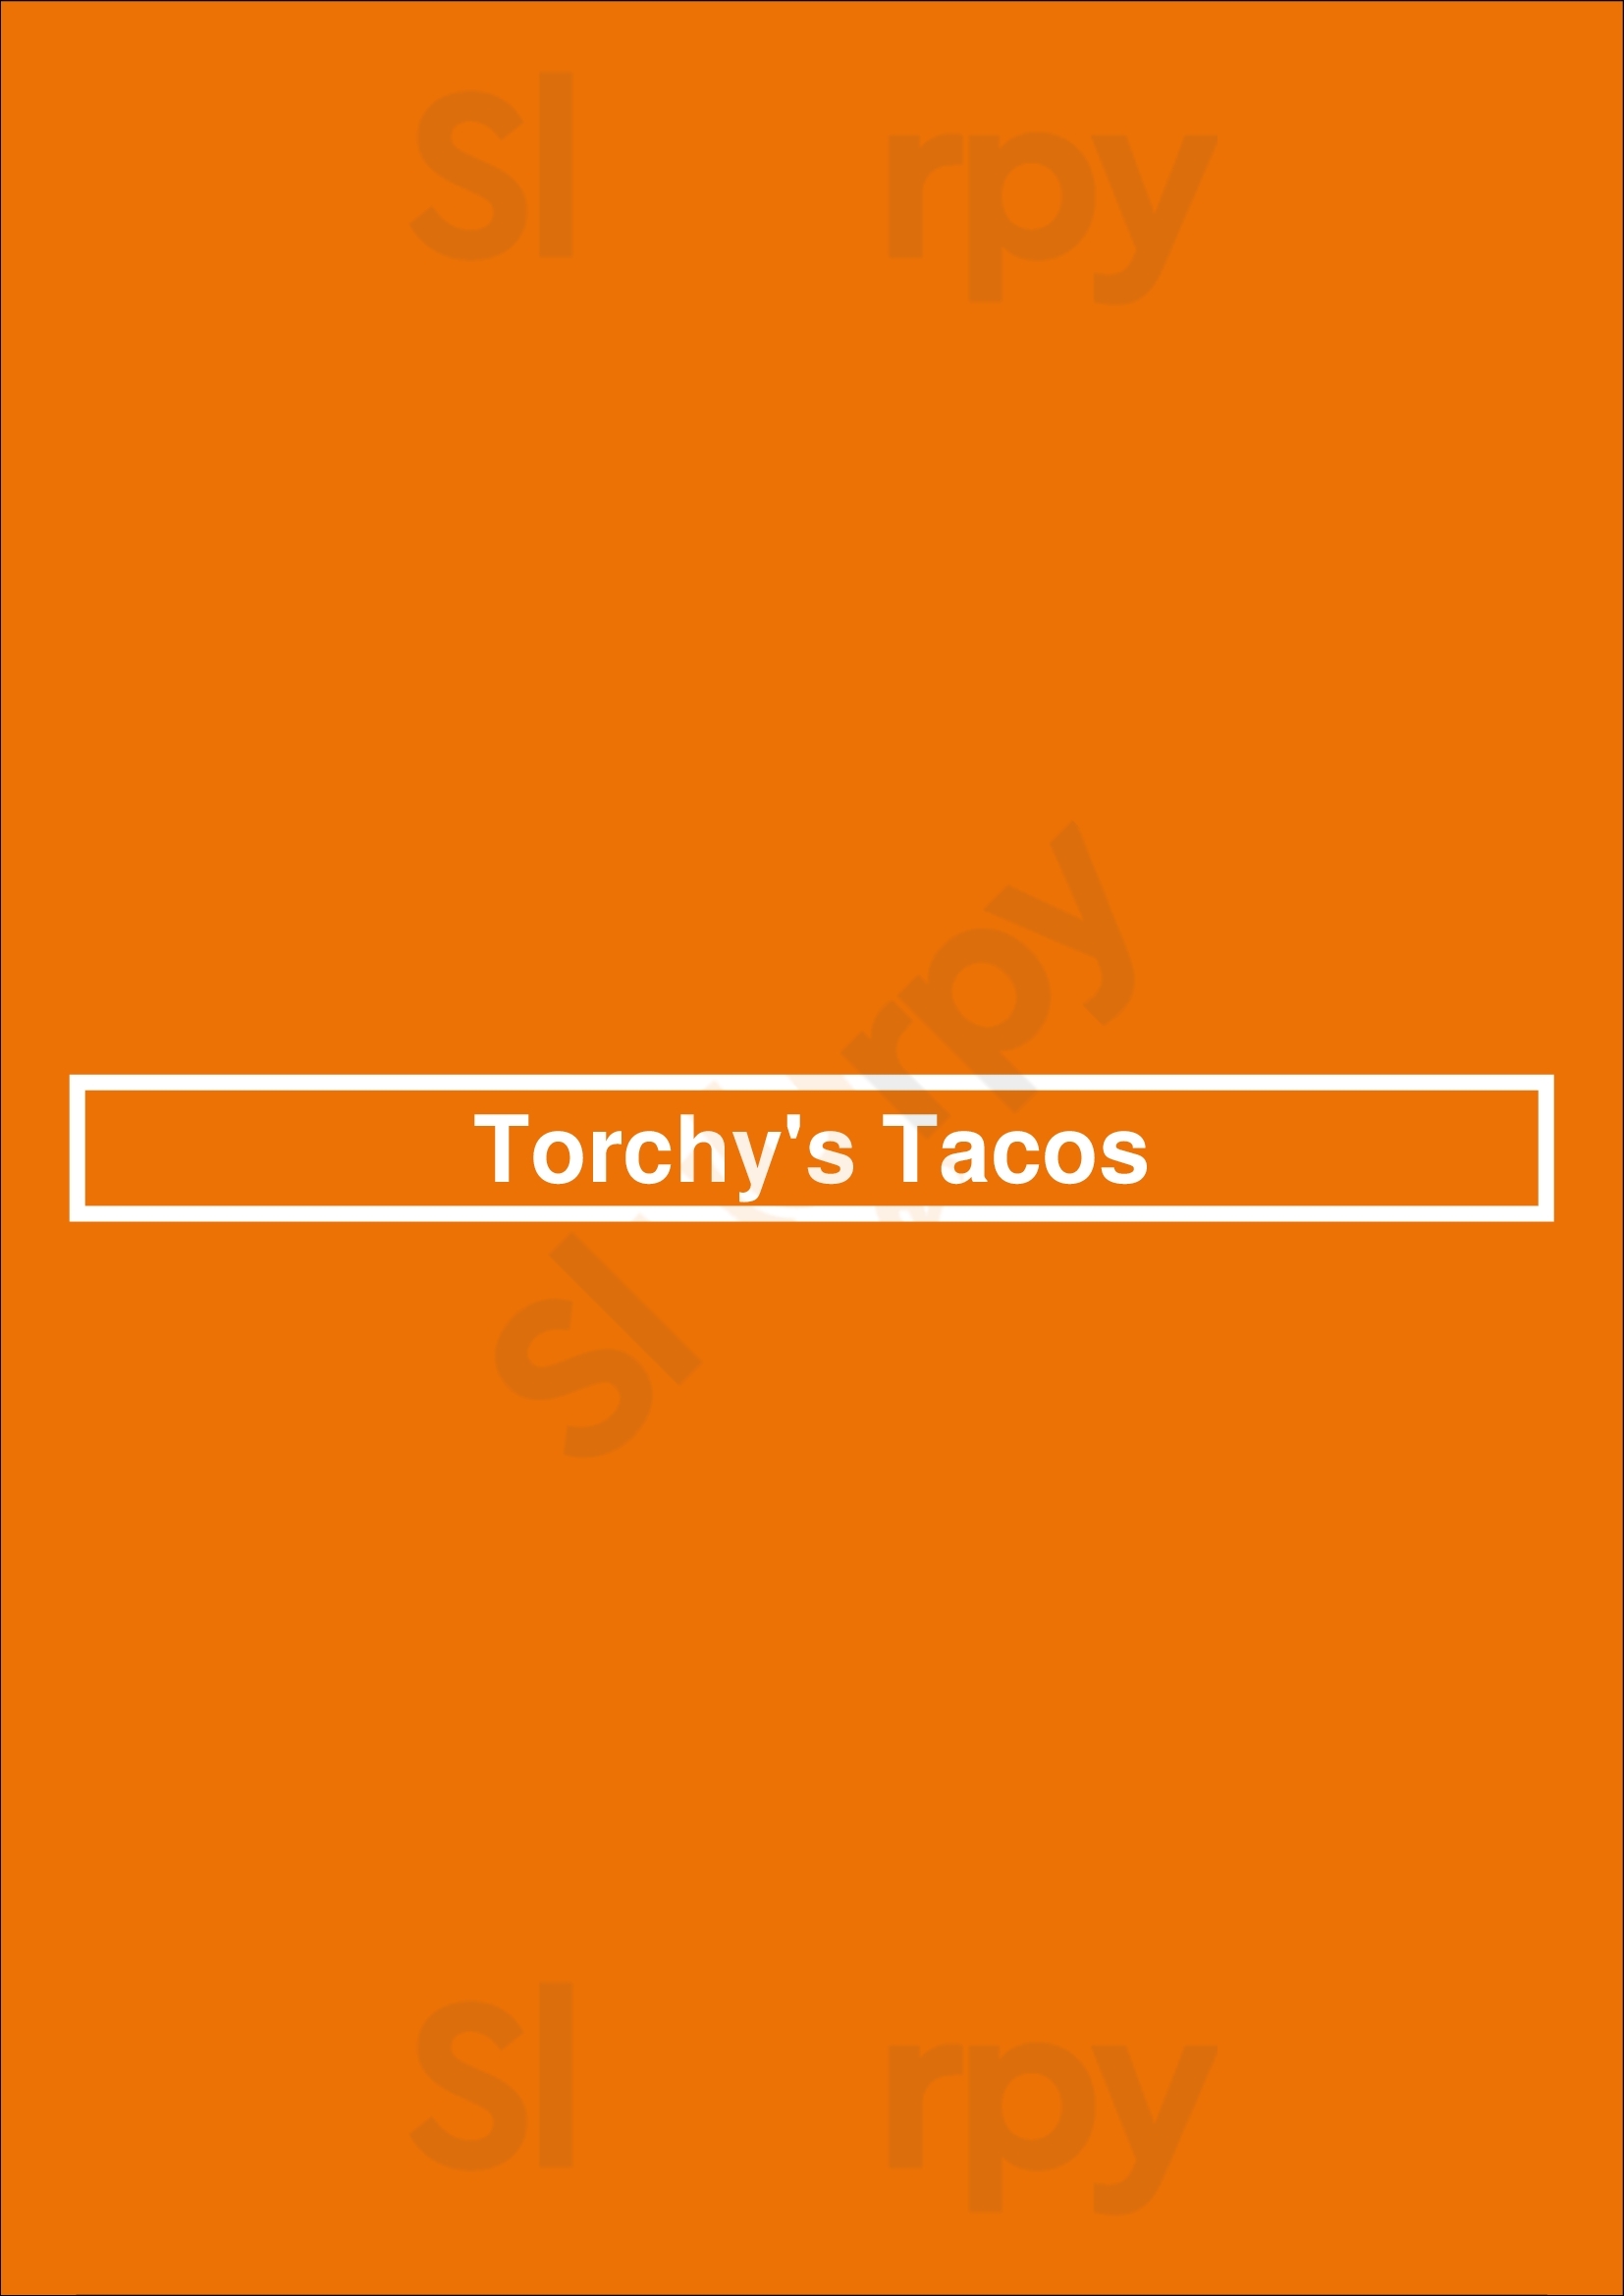 Torchys Tacos Houston Menu - 1